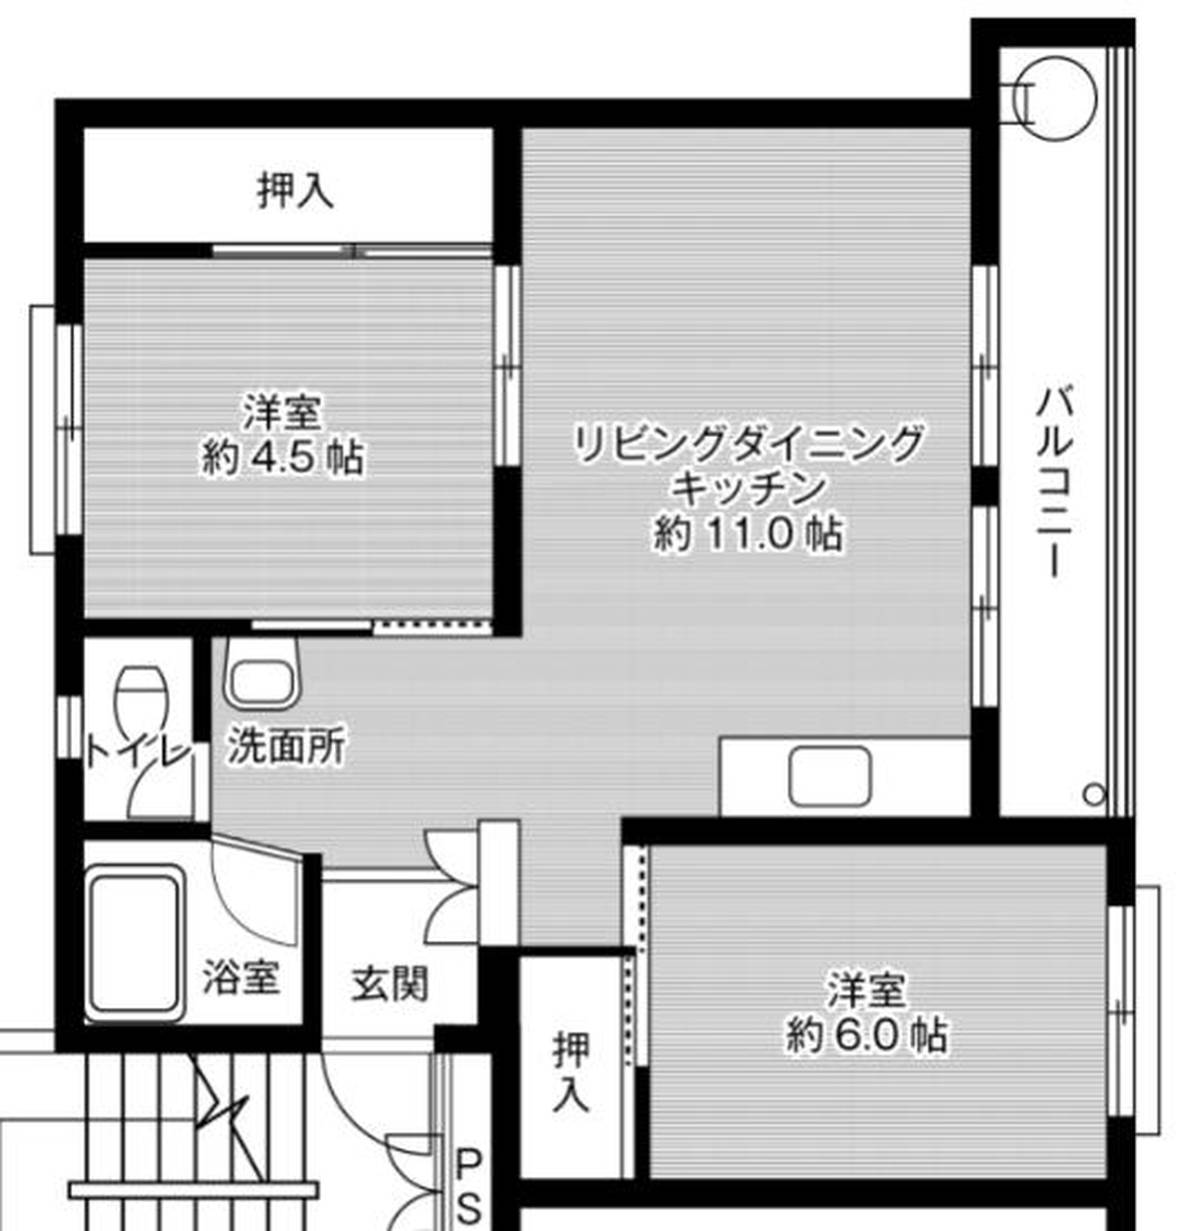 2LDK floorplan of Village House Kouchi in Kochi-shi